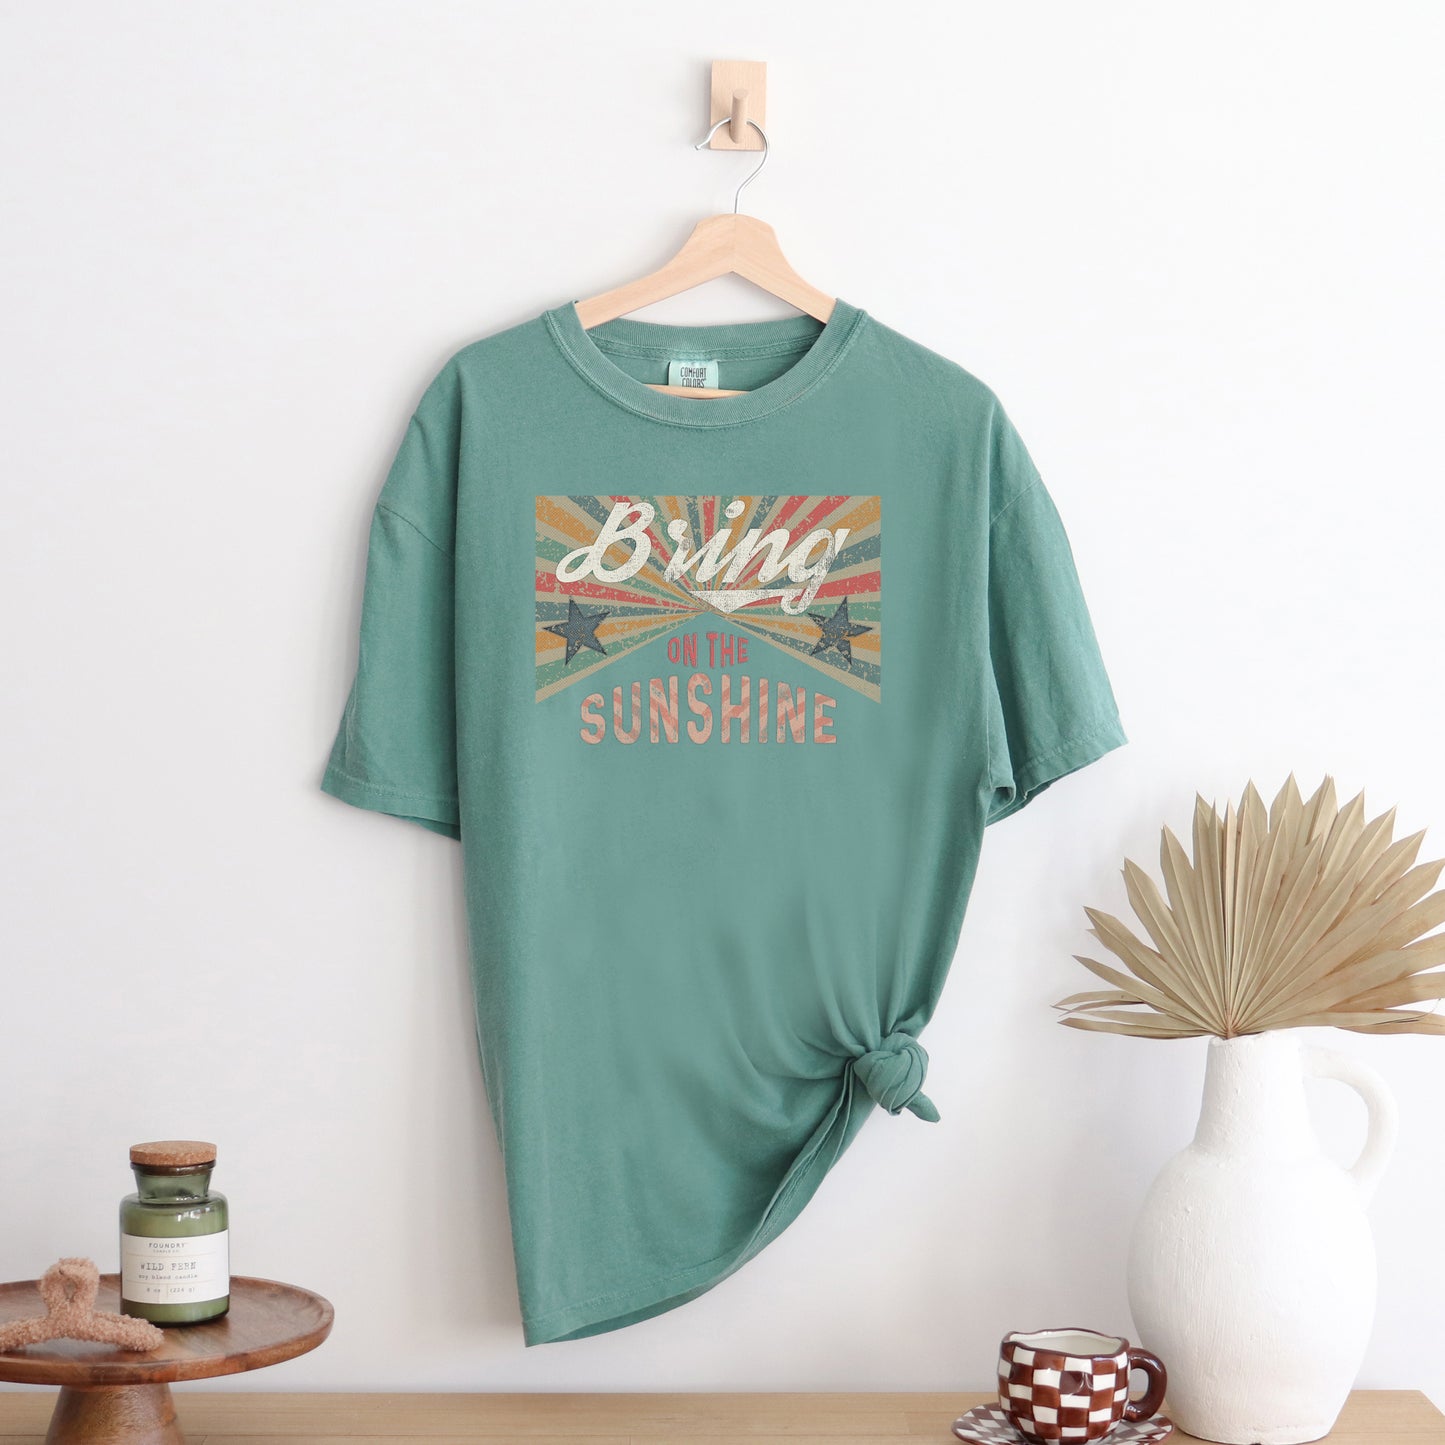 Bring On The Sunshine Stars | Garment Dyed Short Sleeve Tee